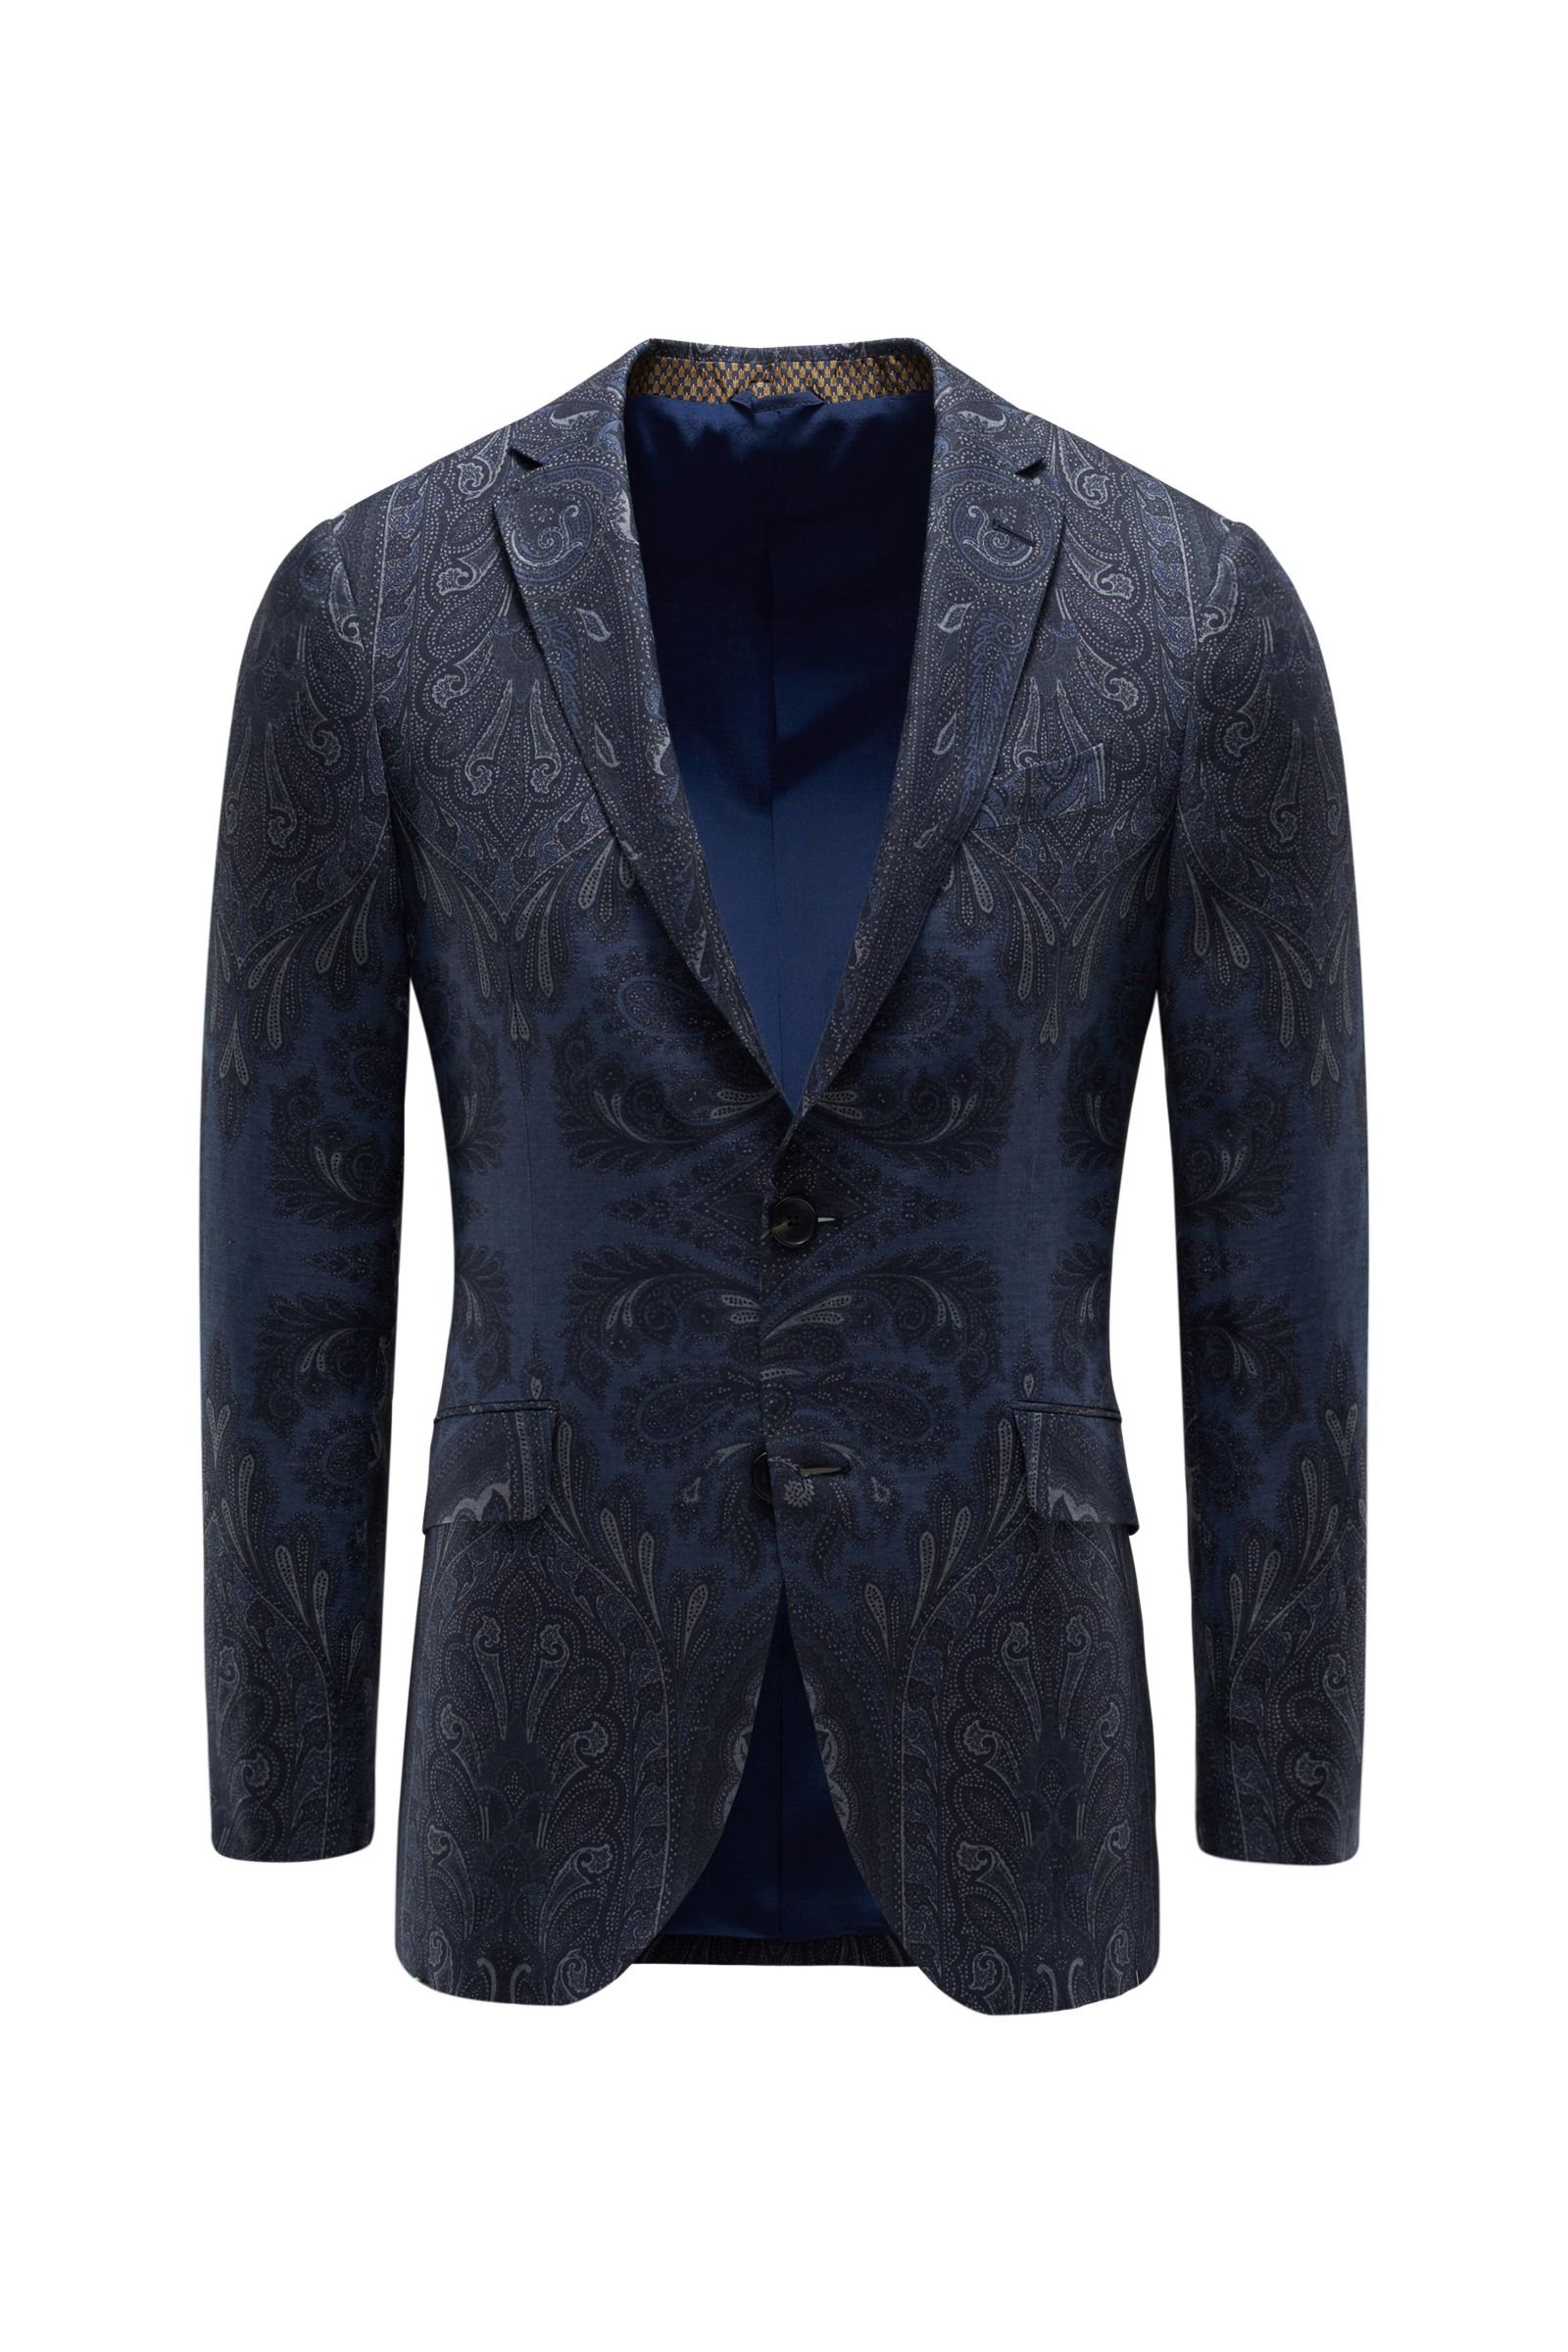 Linen smart-casual jacket navy patterned